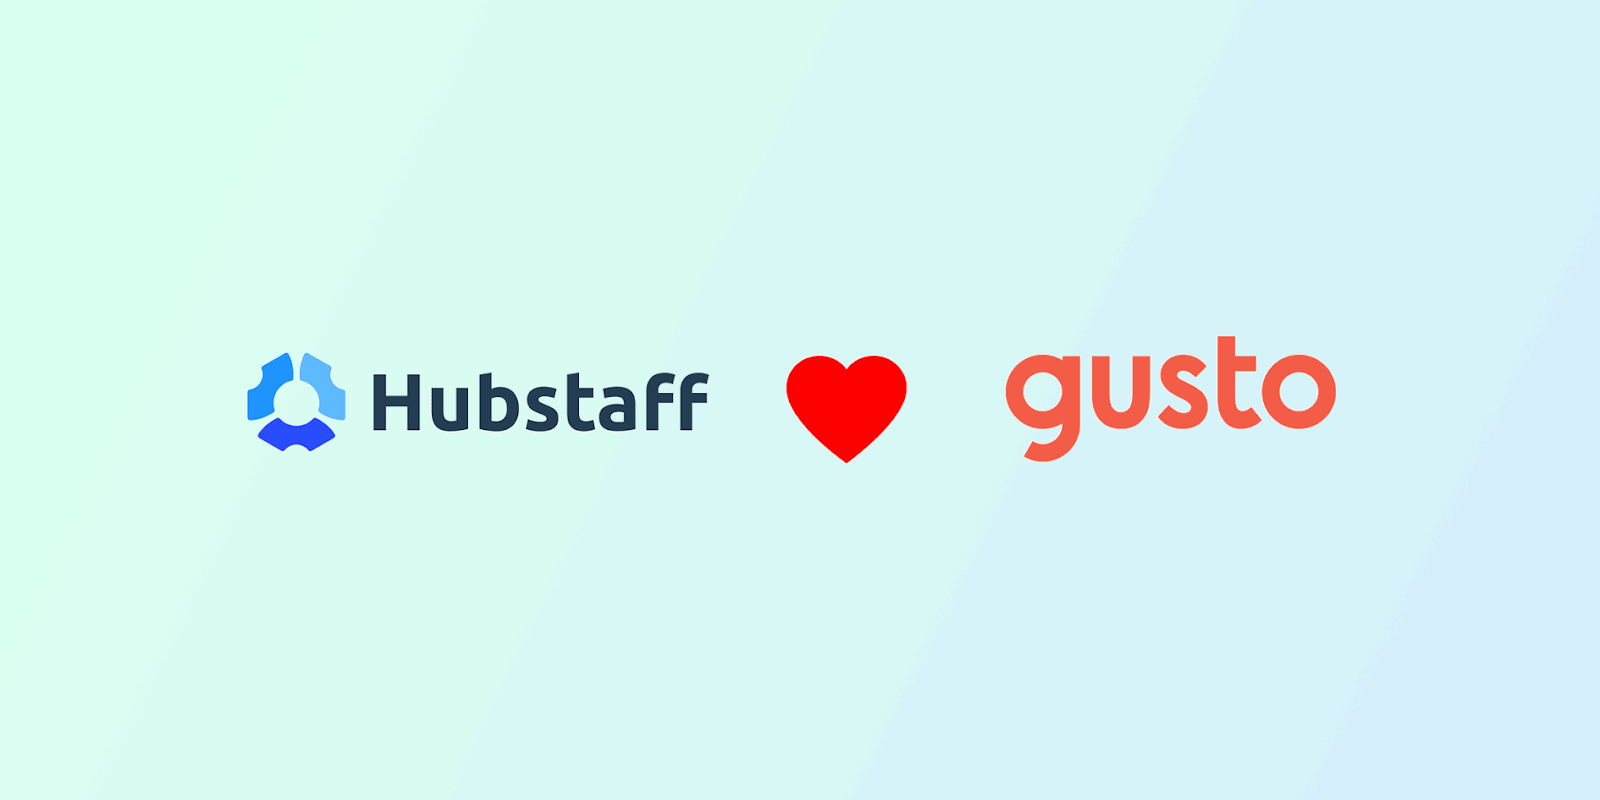 Hubstaff and Gusto